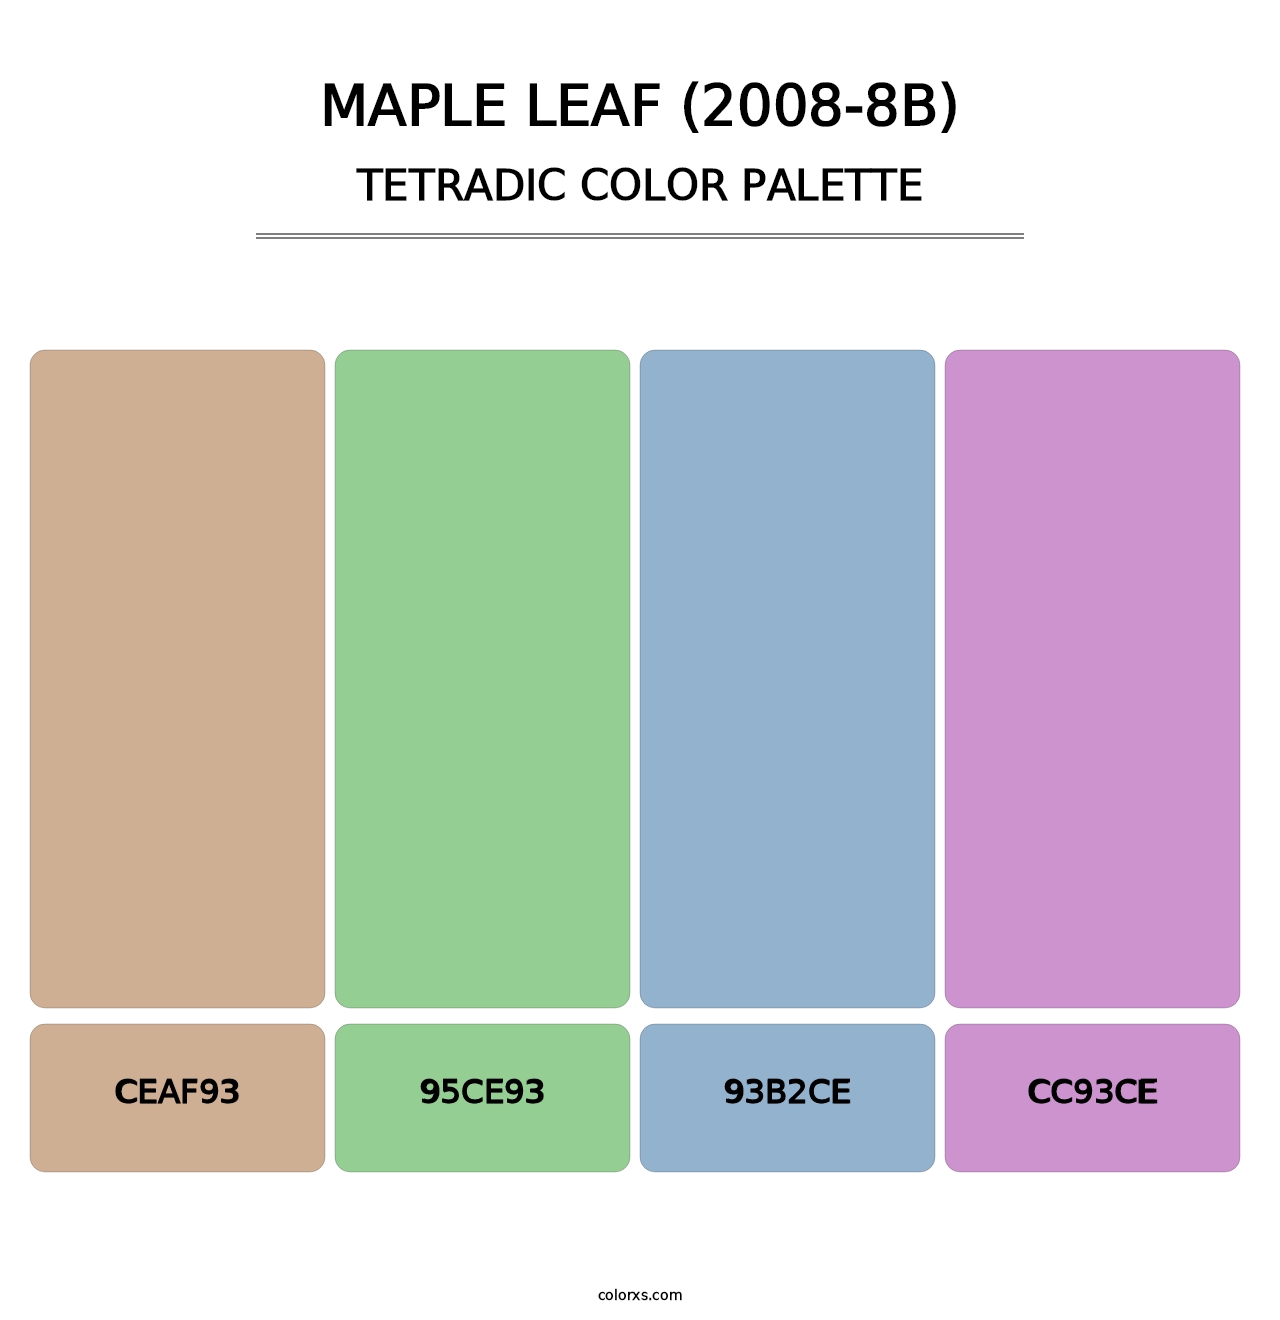 Maple Leaf (2008-8B) - Tetradic Color Palette